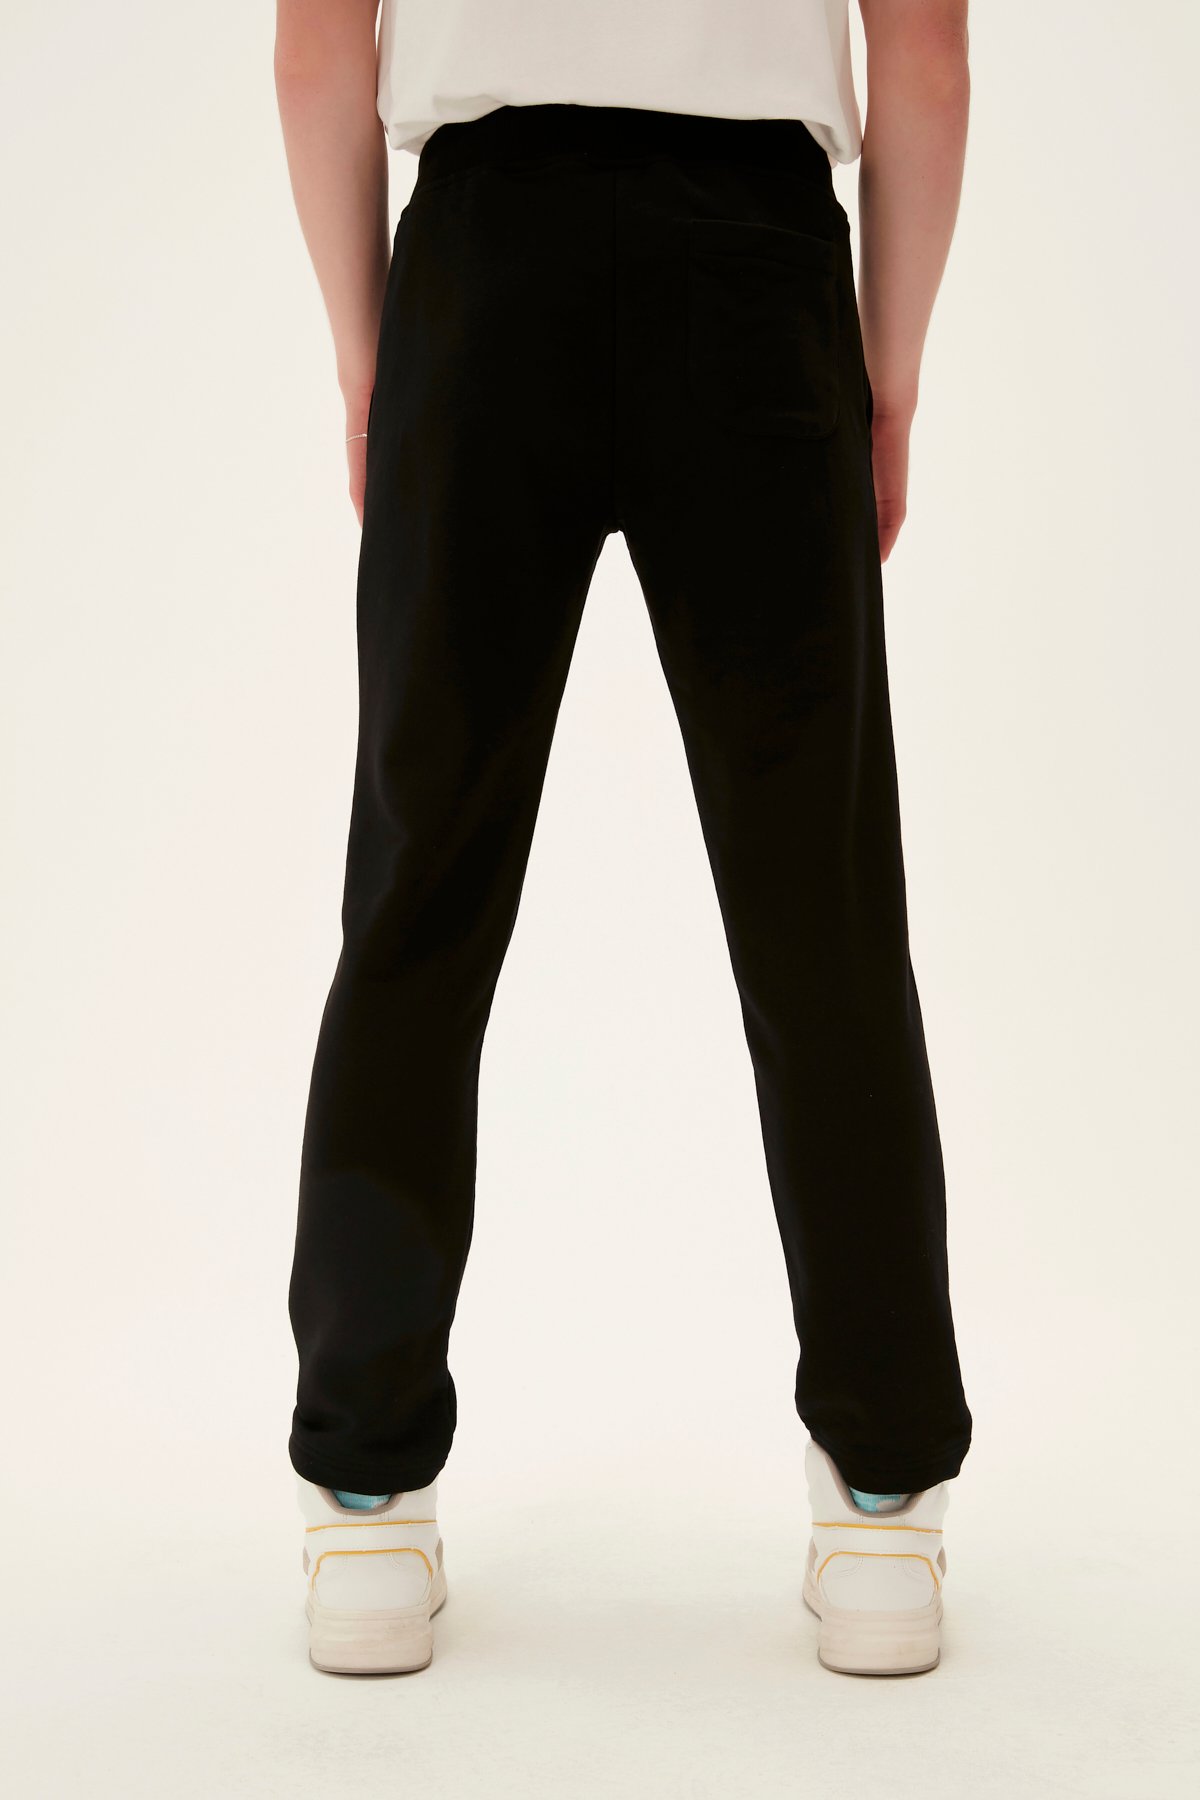 Black Sweatpants For Men Fashion Mens Solid Drawstring Pocket Sports  Trousers Casual Beam Feet Pants 